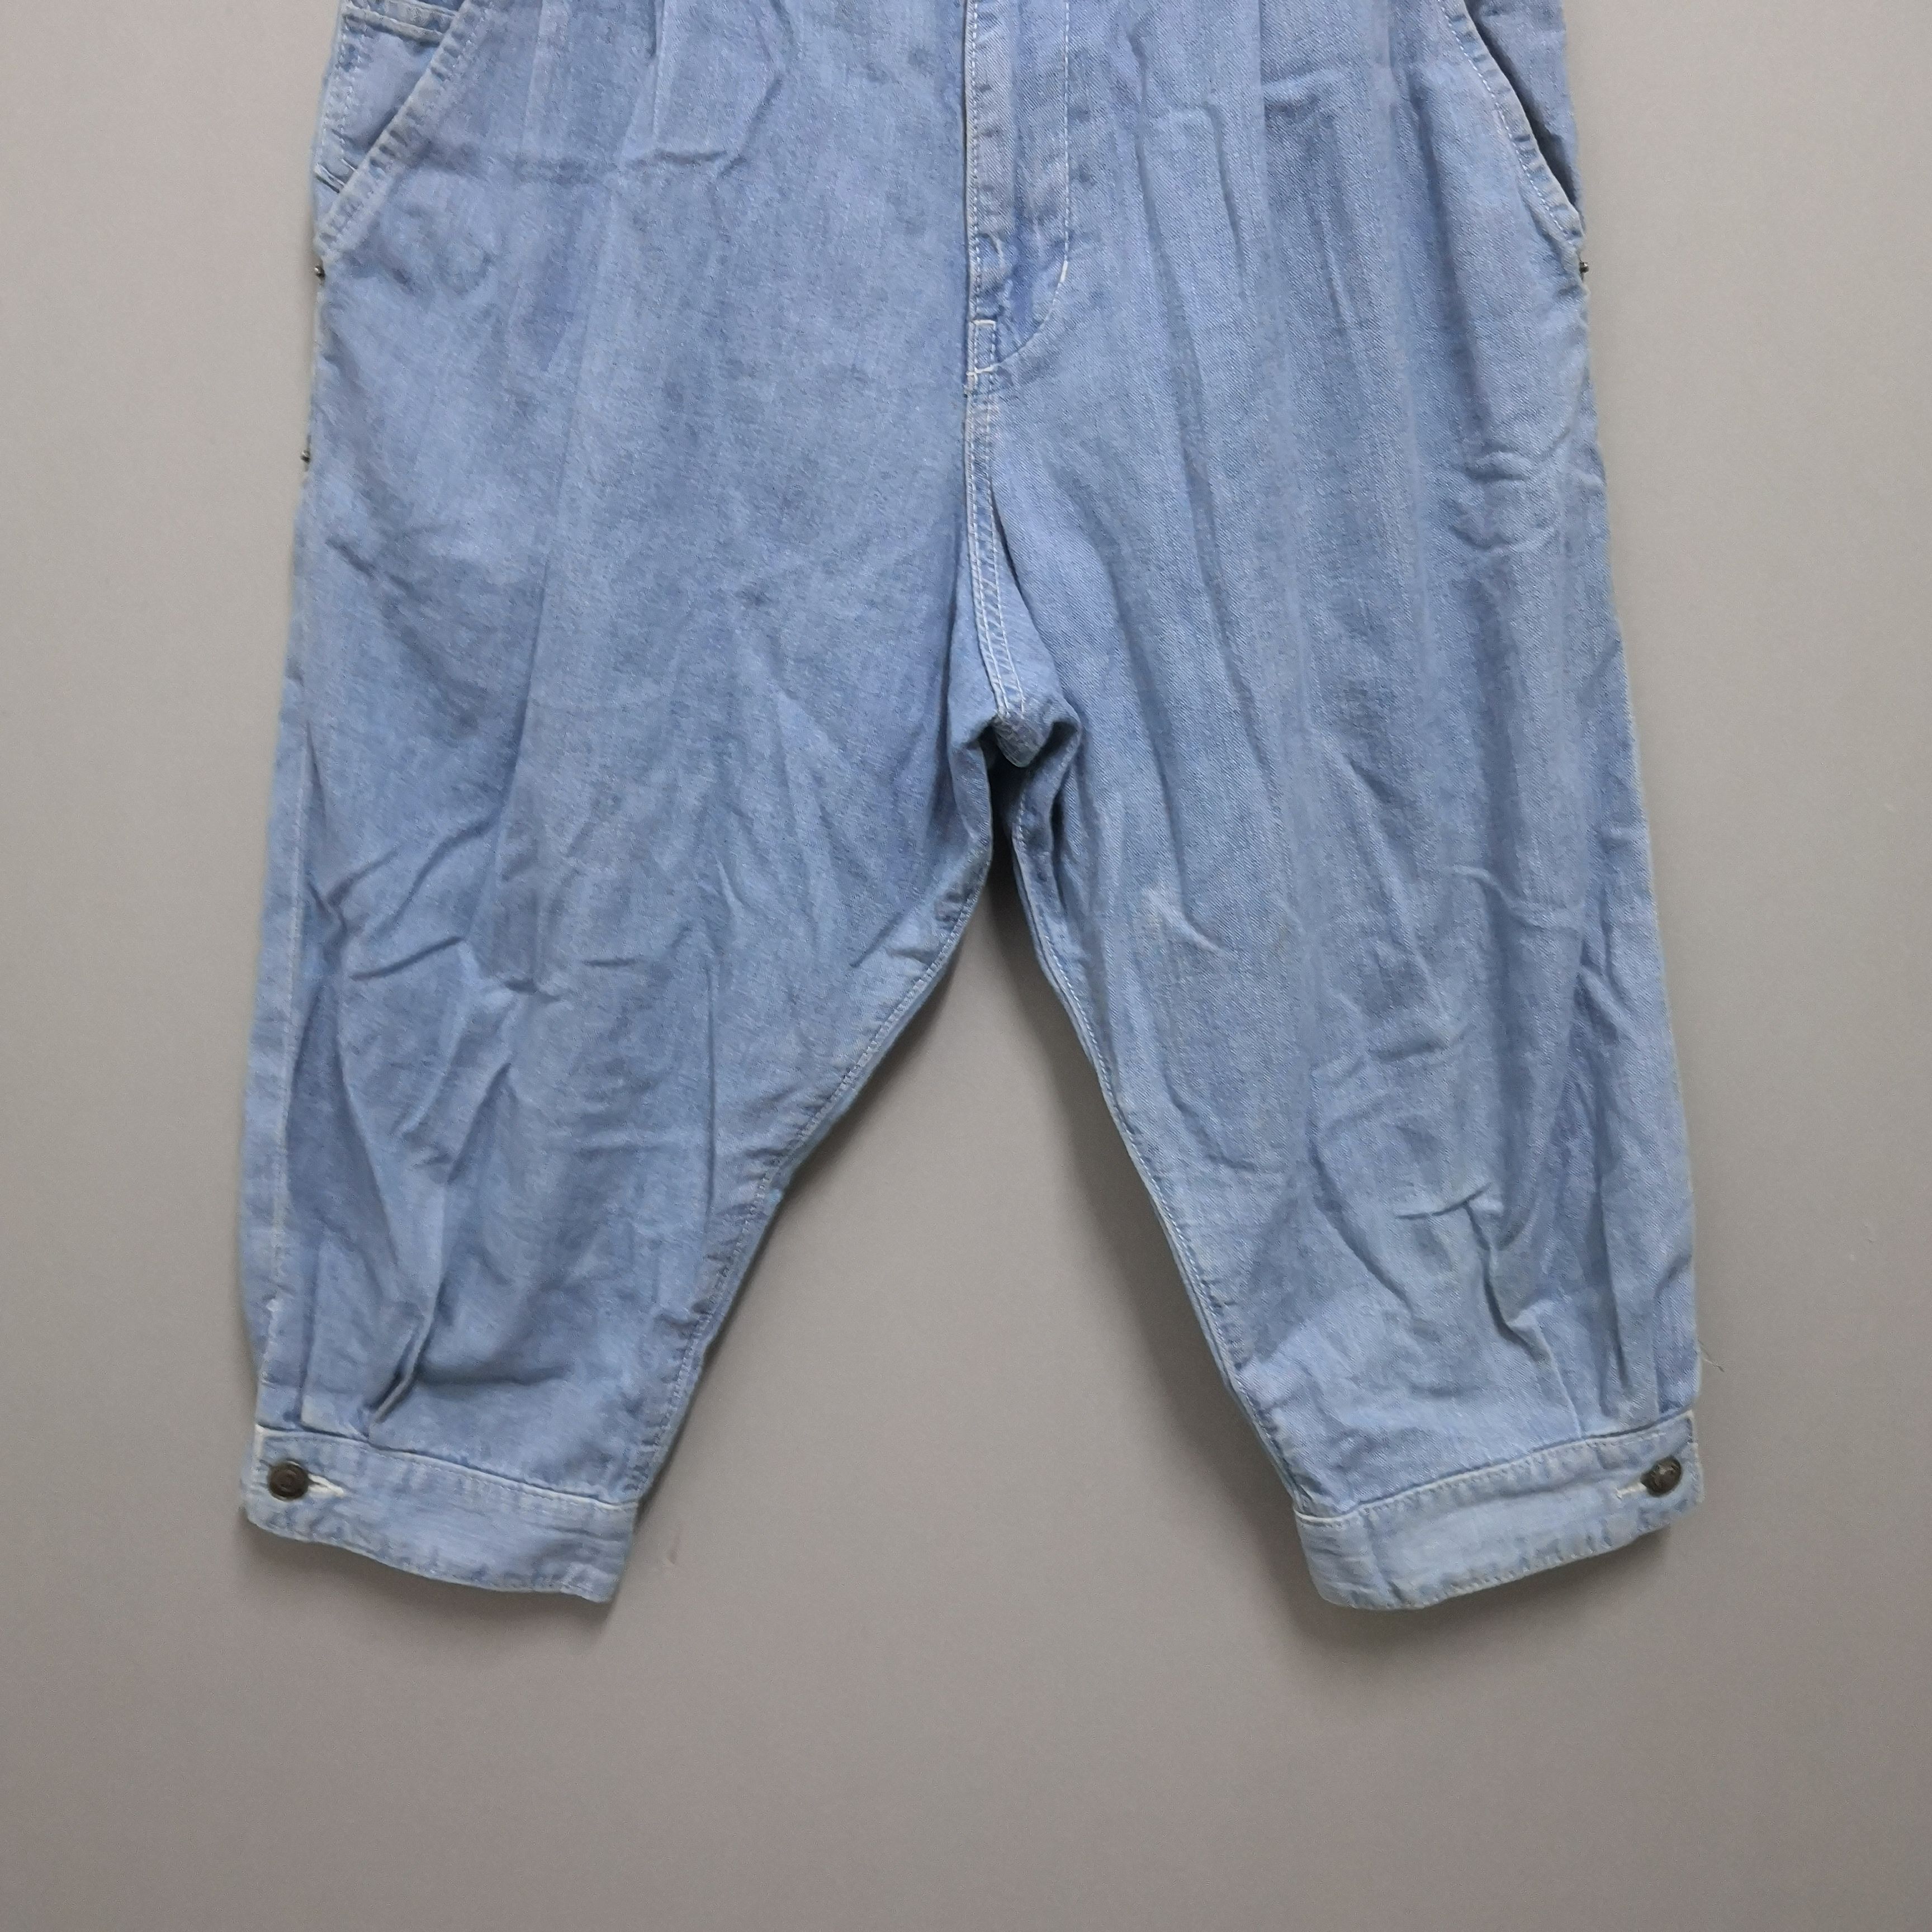 Issey Miyake - Mercibeaucoup Blue Clown Pants Jeans Japan Streetwear - 4